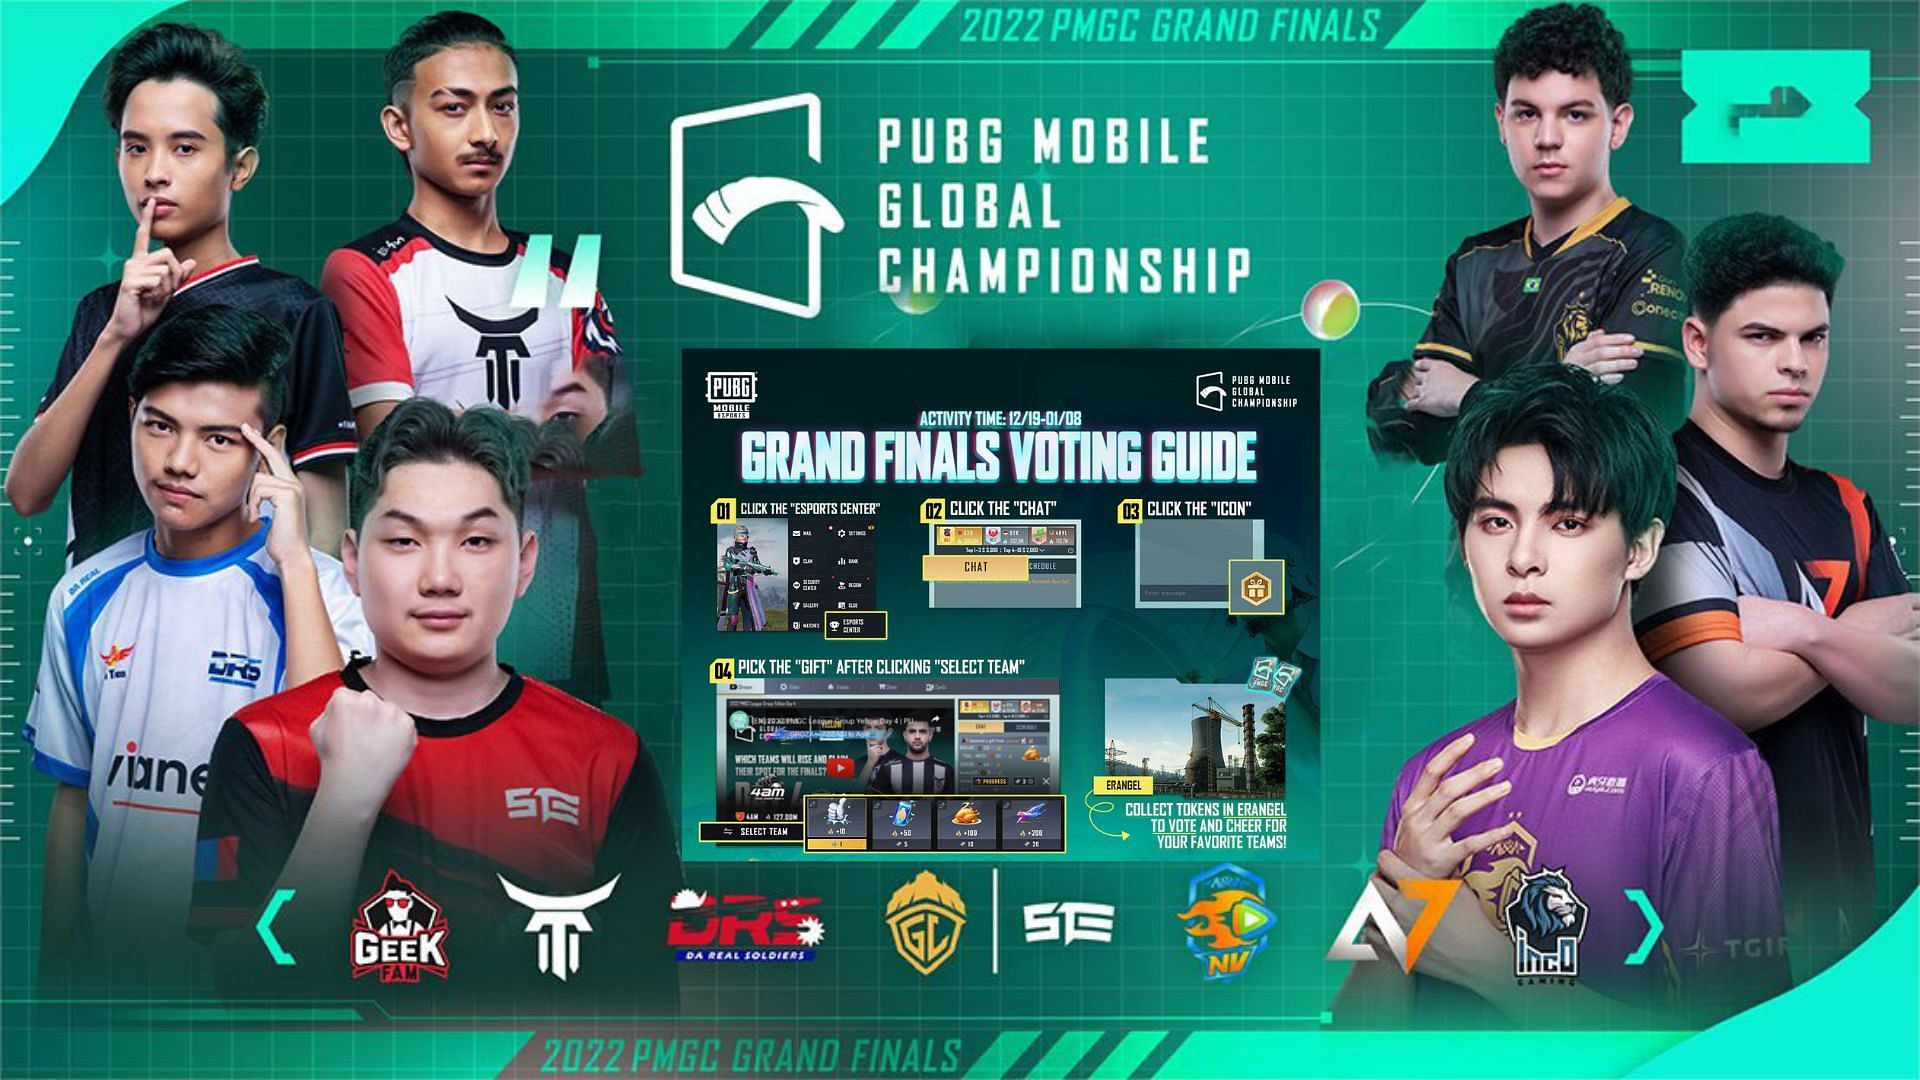 PUBG Mobile revealed Fan Favourite Team award for PMGC Grand Finals (Image Sportskeeda)